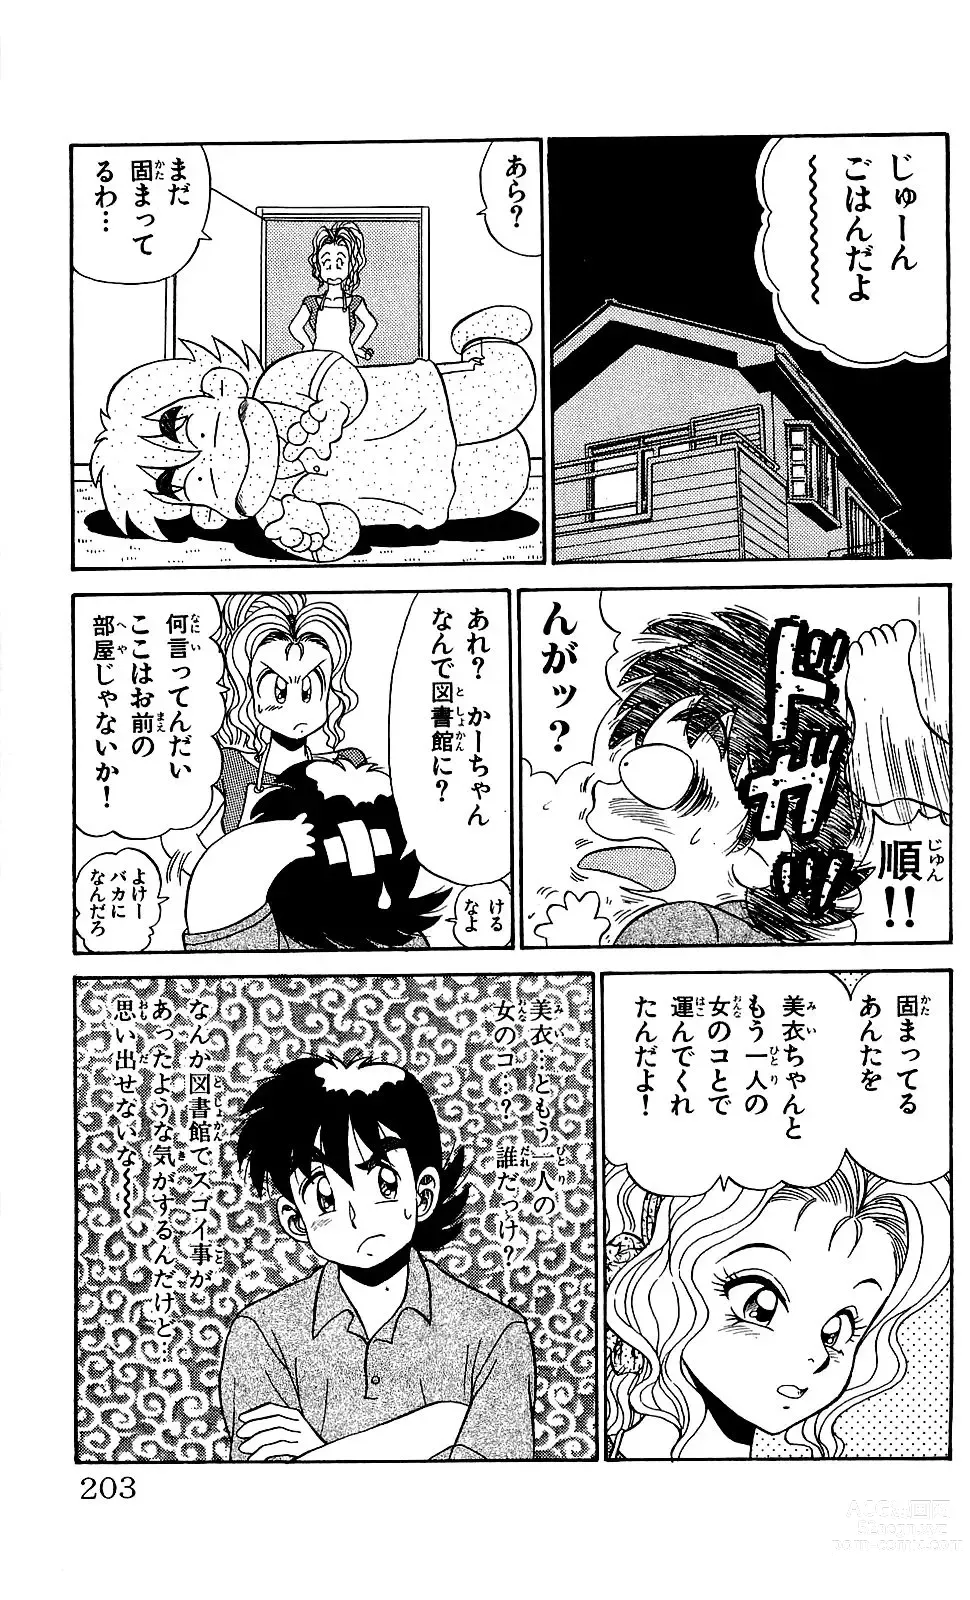 Page 201 of manga Orette Piyoritan Vol. 1